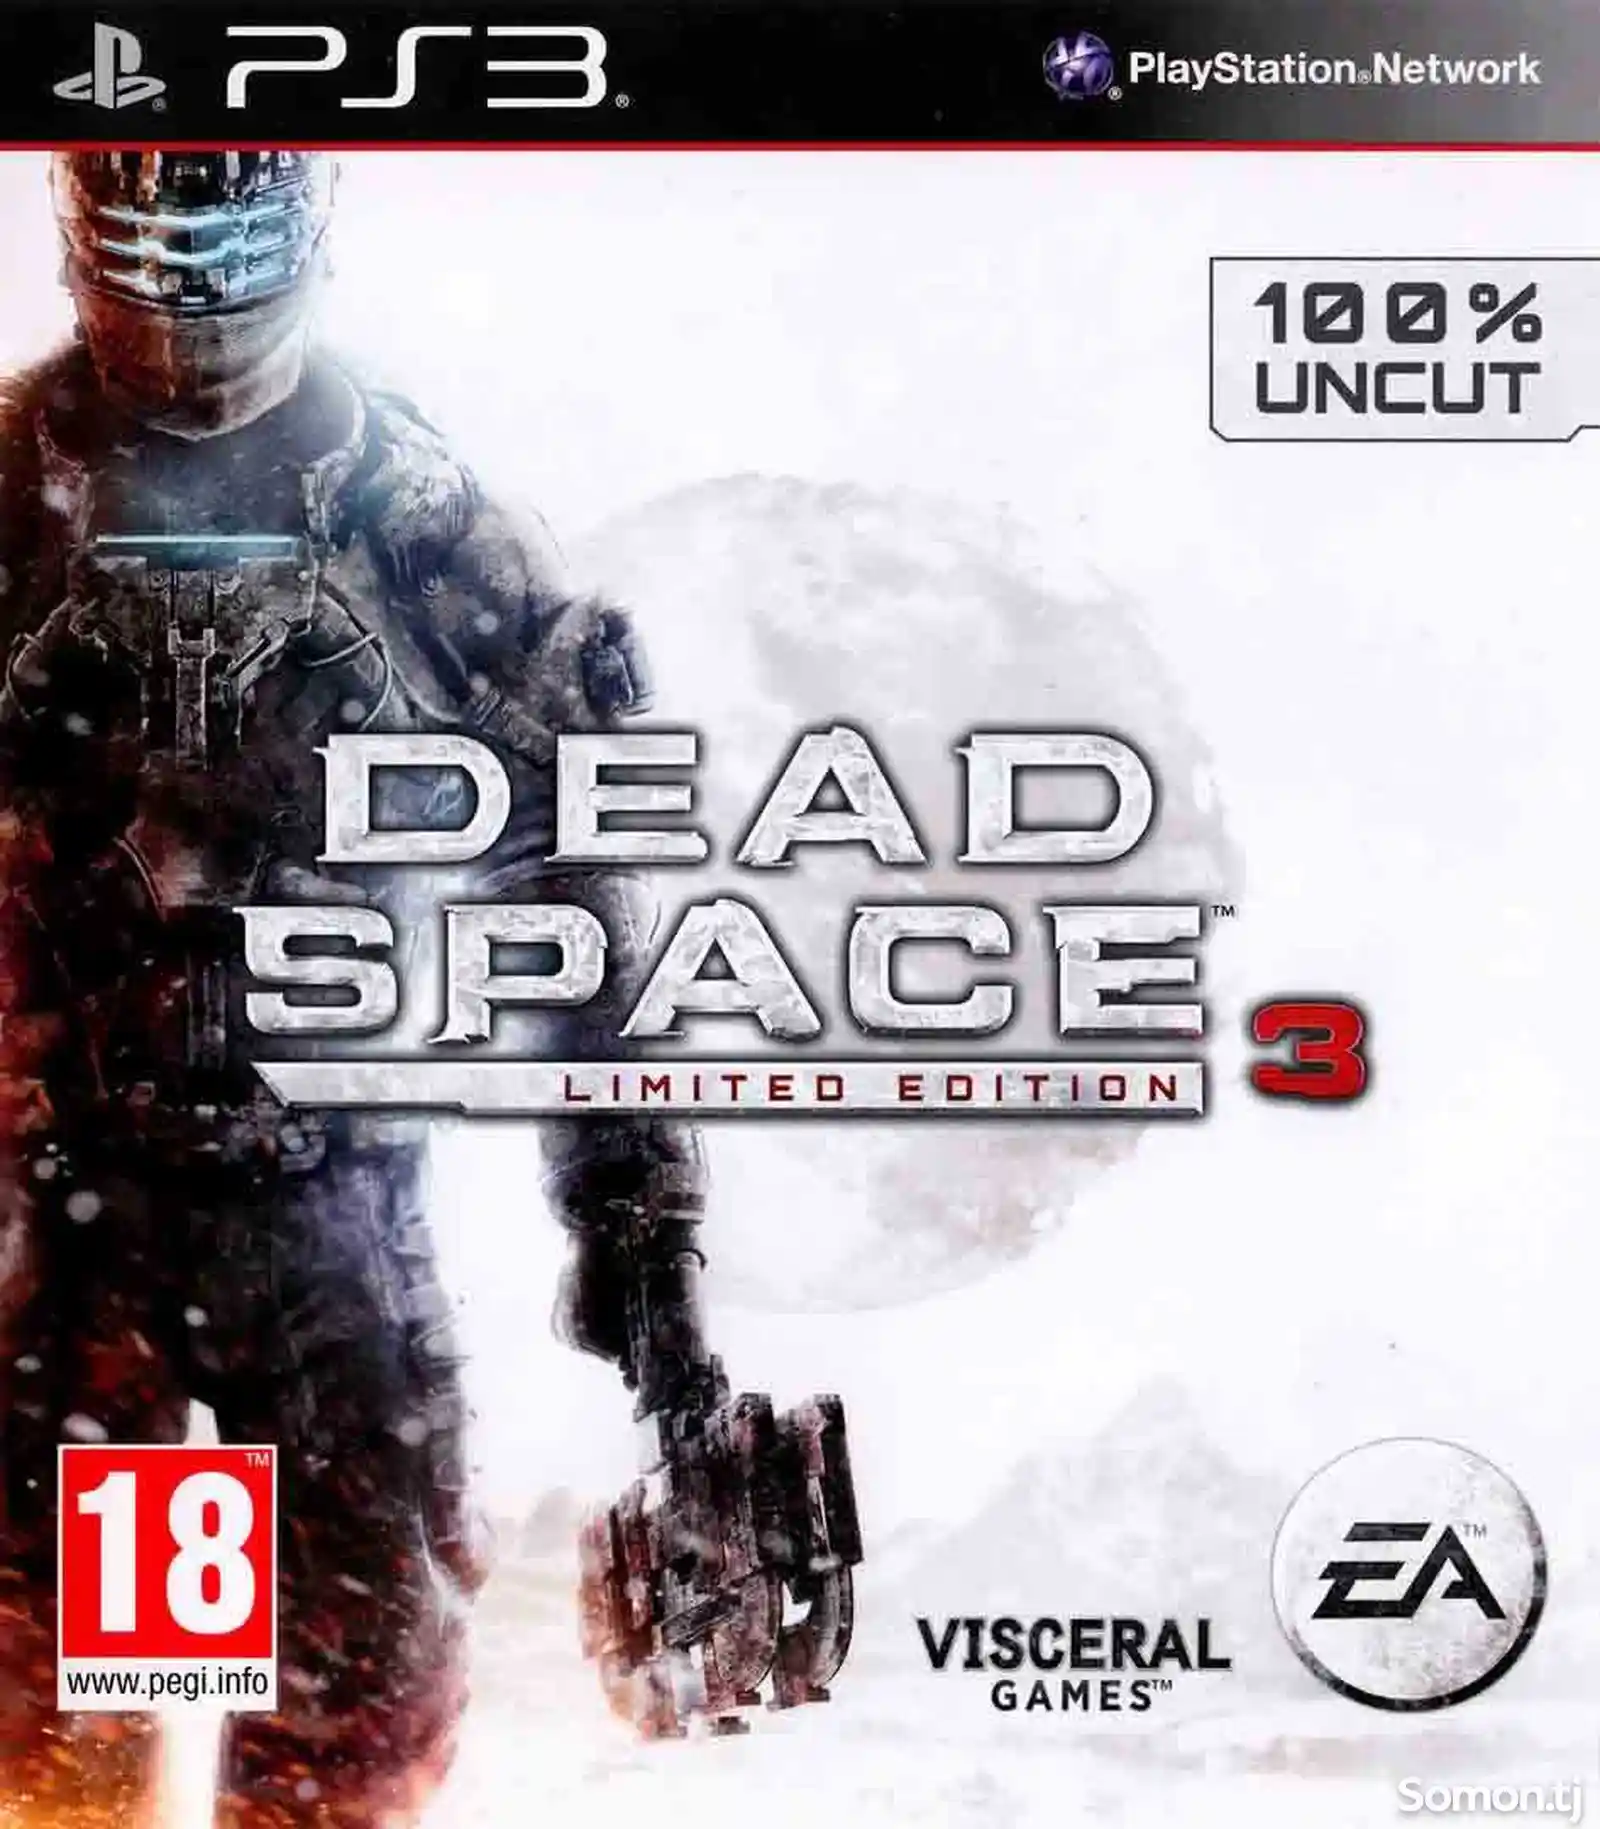 Игра Dead Space 3 на всех моделей Play Station-3